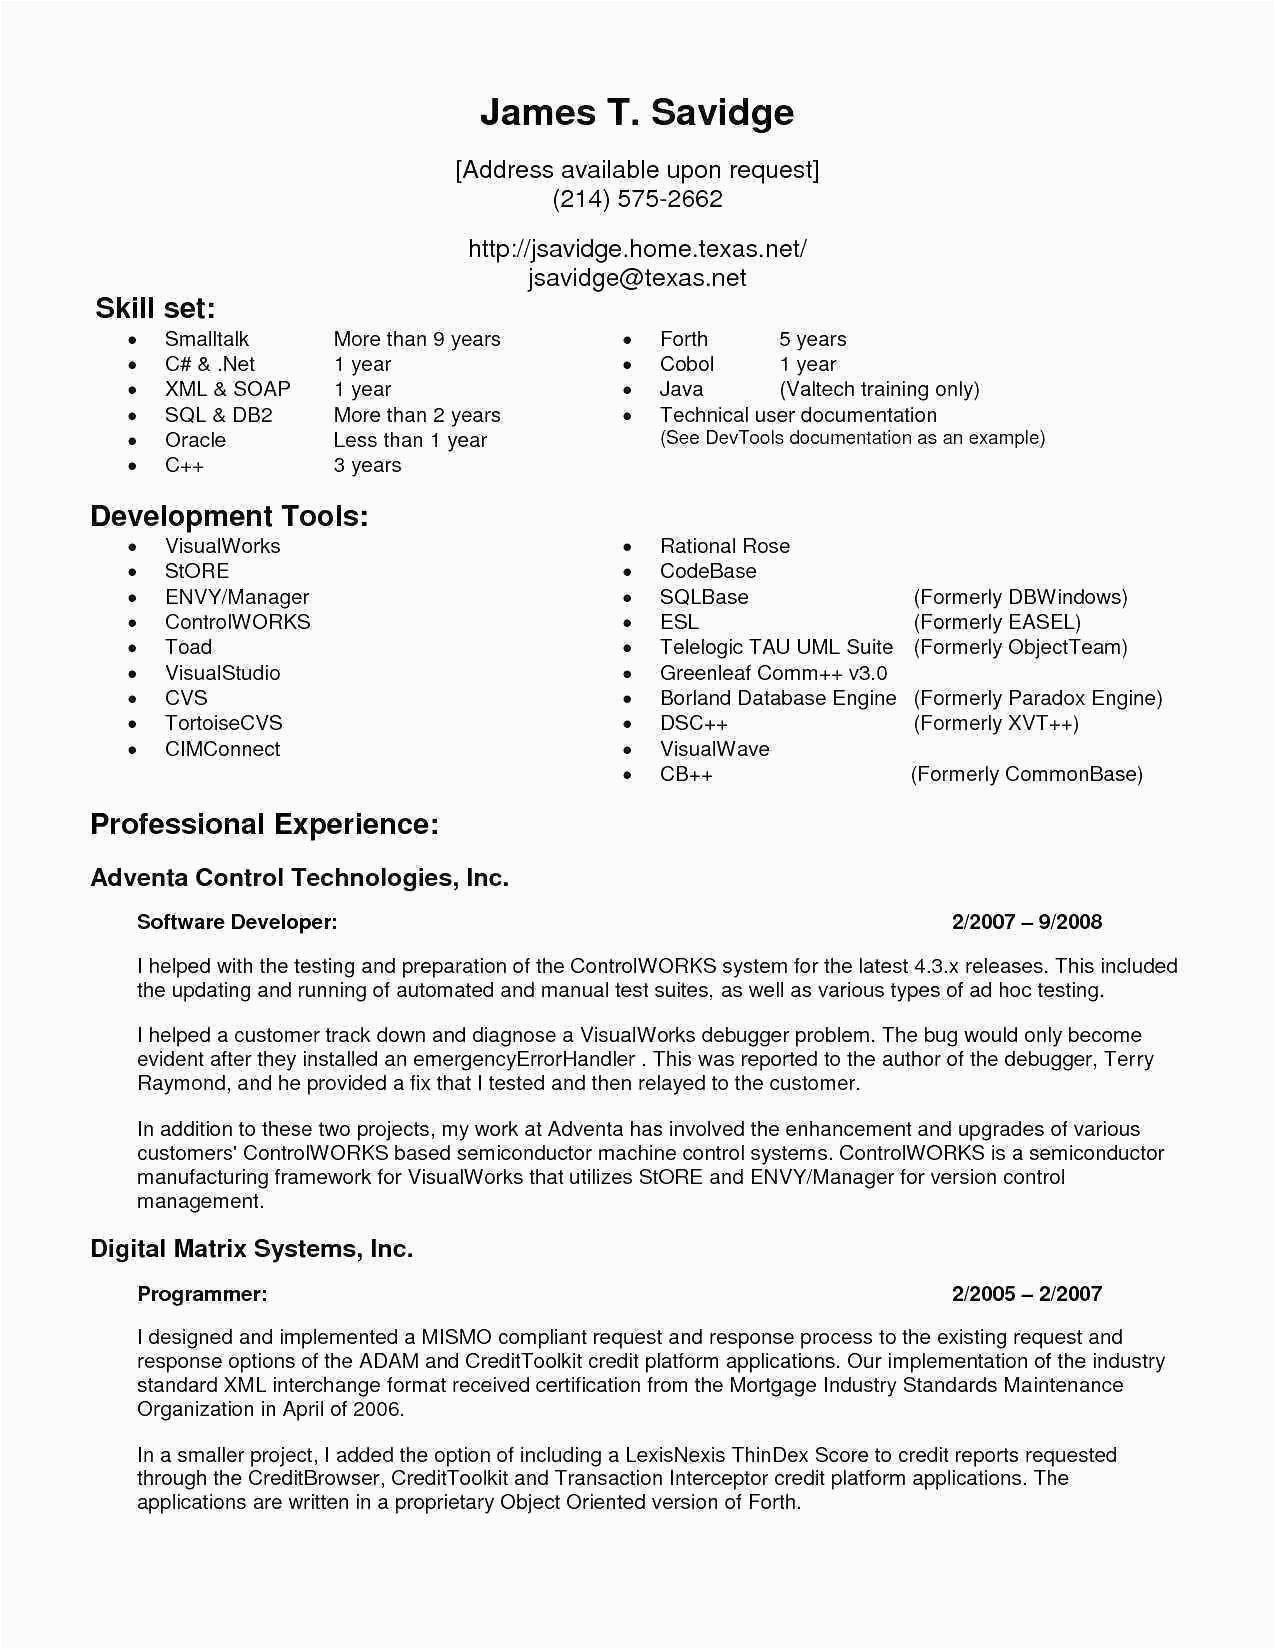 Sample Resume Java Developer 3 Years Experience Java Resume Sample 3 Years Experience Best Resume Examples